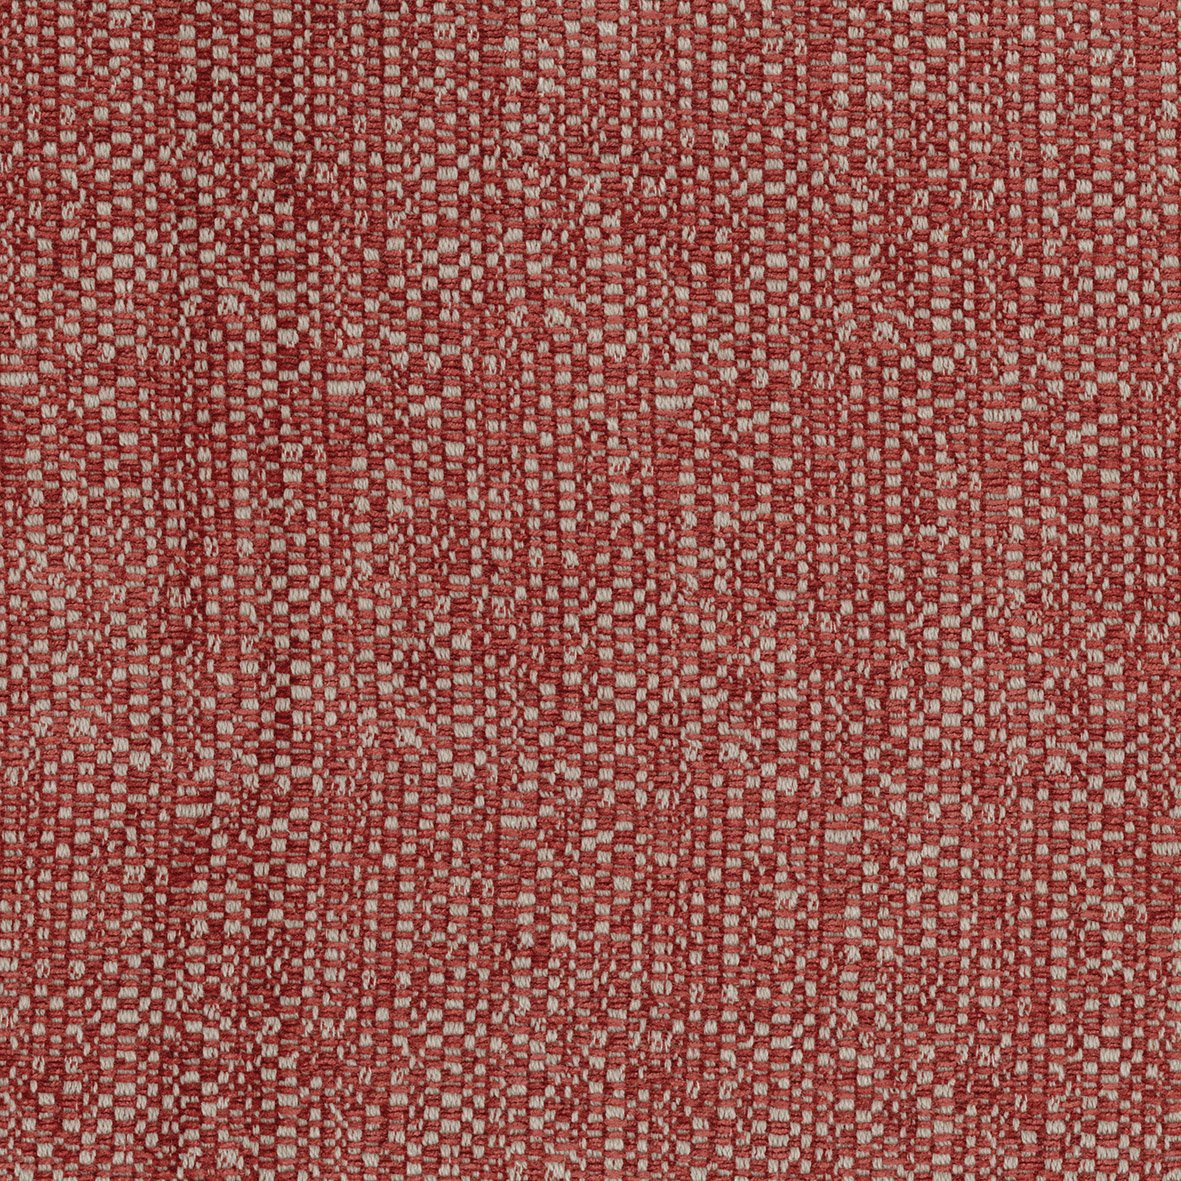 Nina Campbell Fabric - Poquelin Cyrano Coral Red NCF4310-01